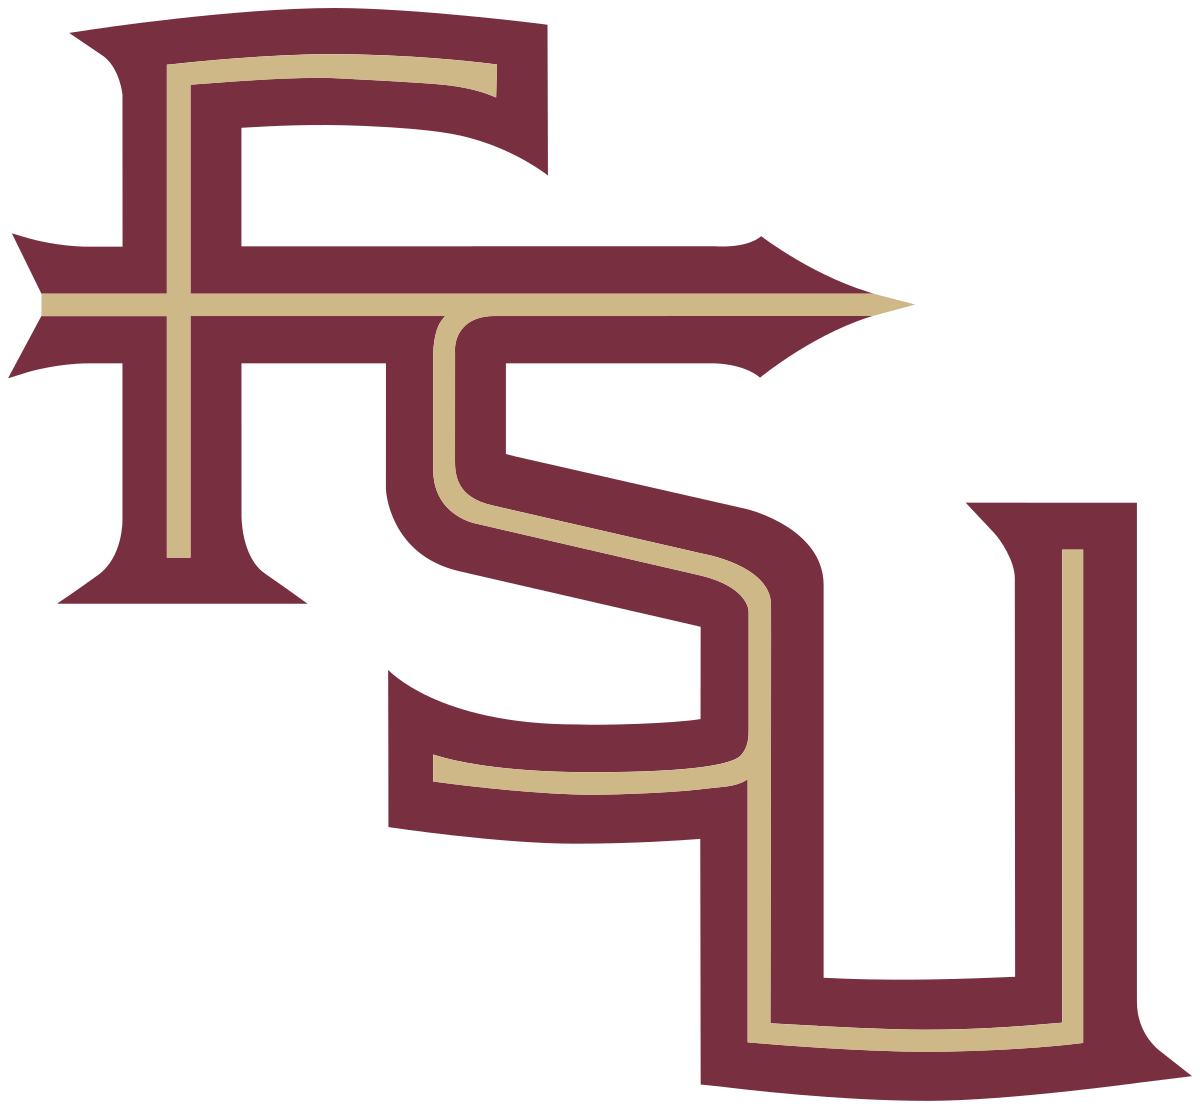 Florida State Seminoles Football Team Logo - Florida State Seminoles football